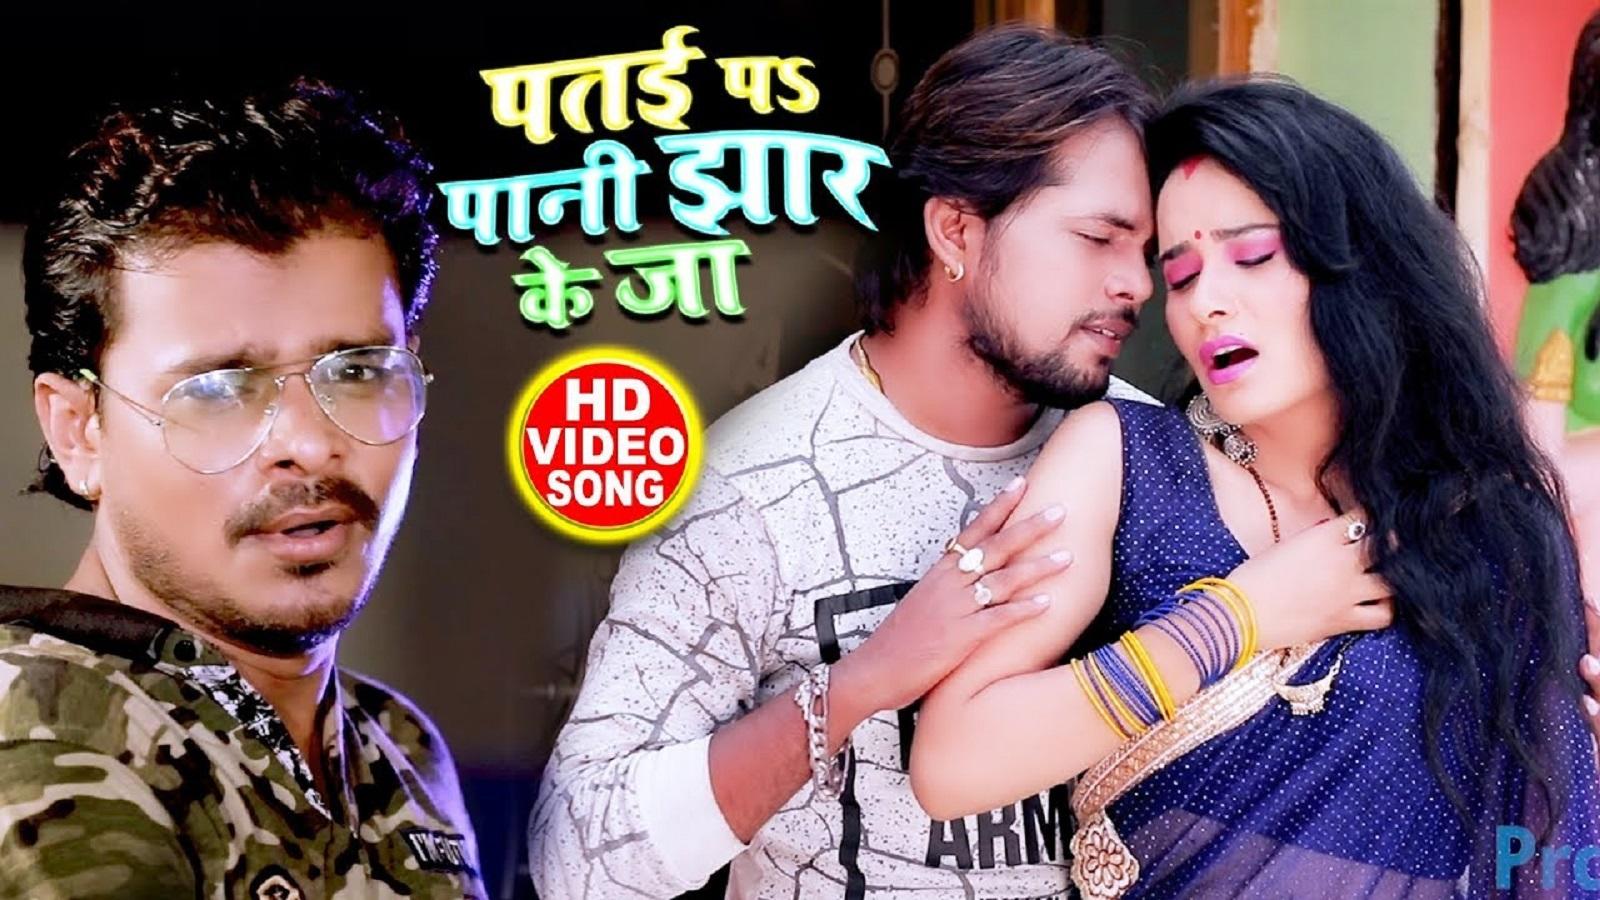 Watch Bhojpuri Gana Video Song Pramod Premi Yadav S Hit Bhojpuri Song Patai Pa Paani Jhaar Ke Ja